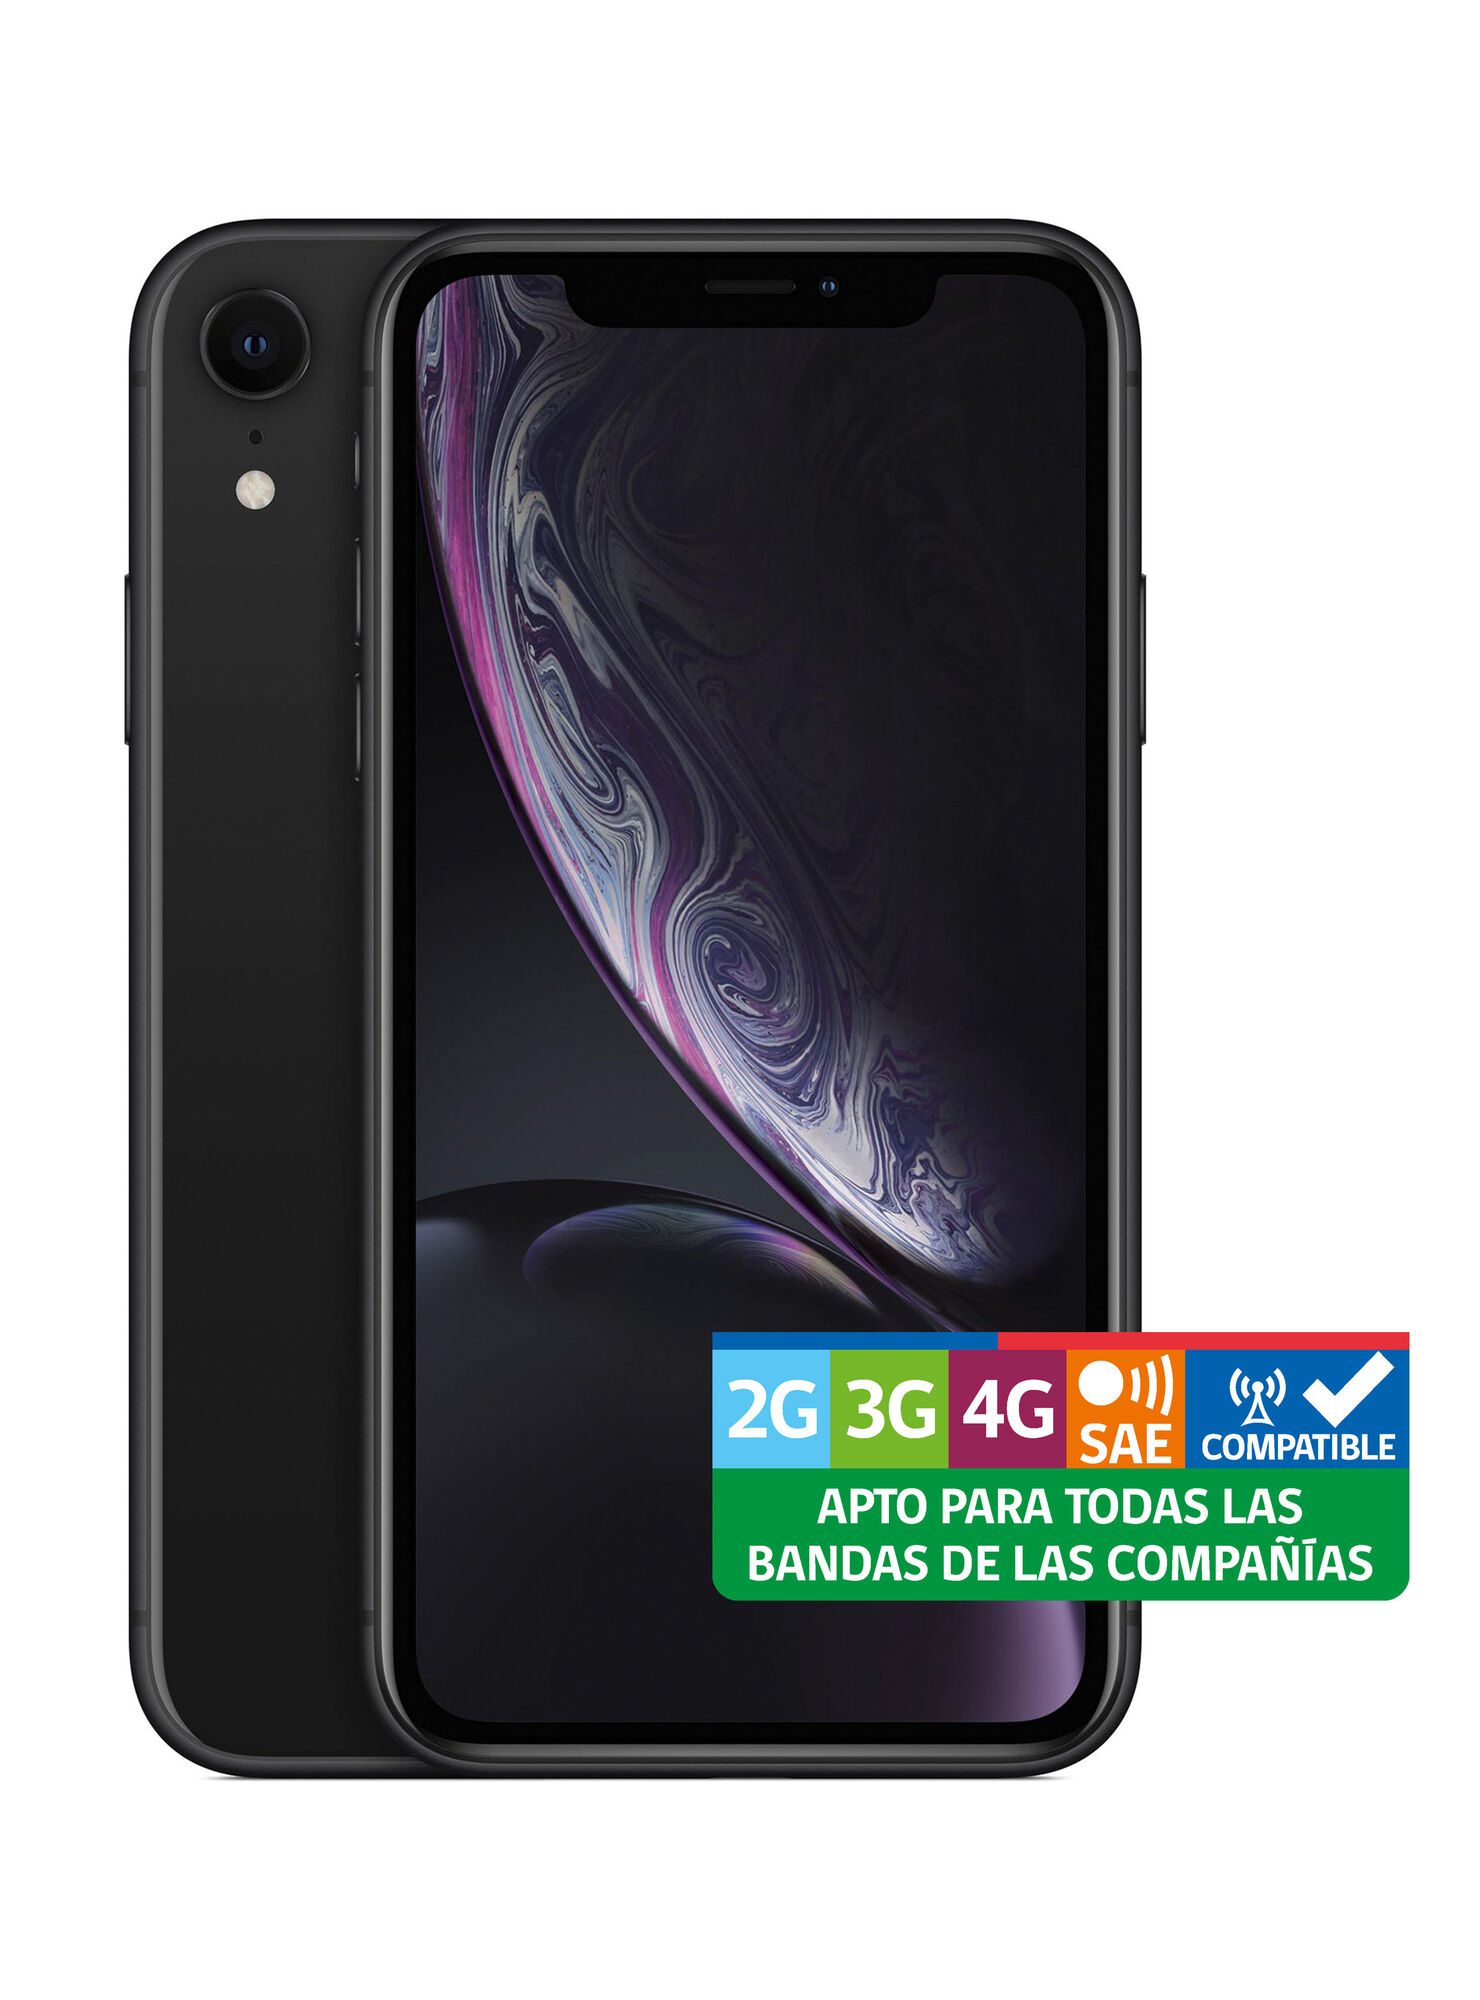 iPhone XR 64GB Black 6.1" Liberado en Celulares Paris